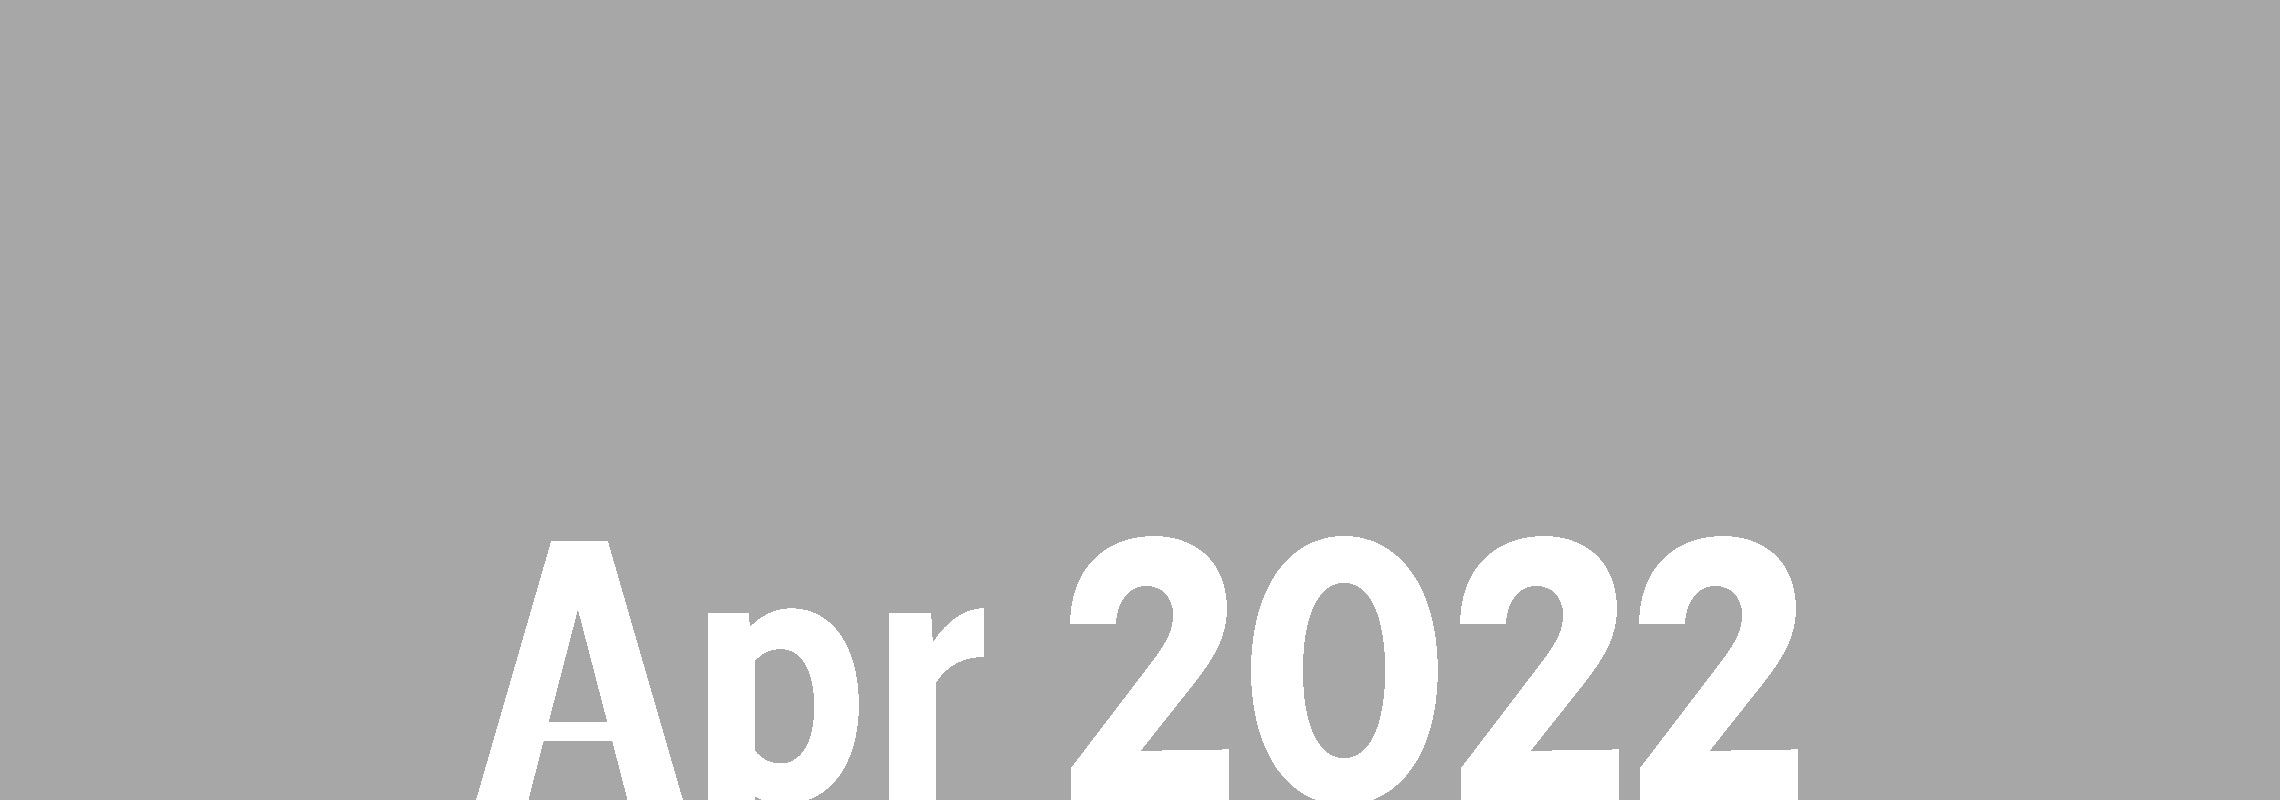 Matrix Newsletter April 2022